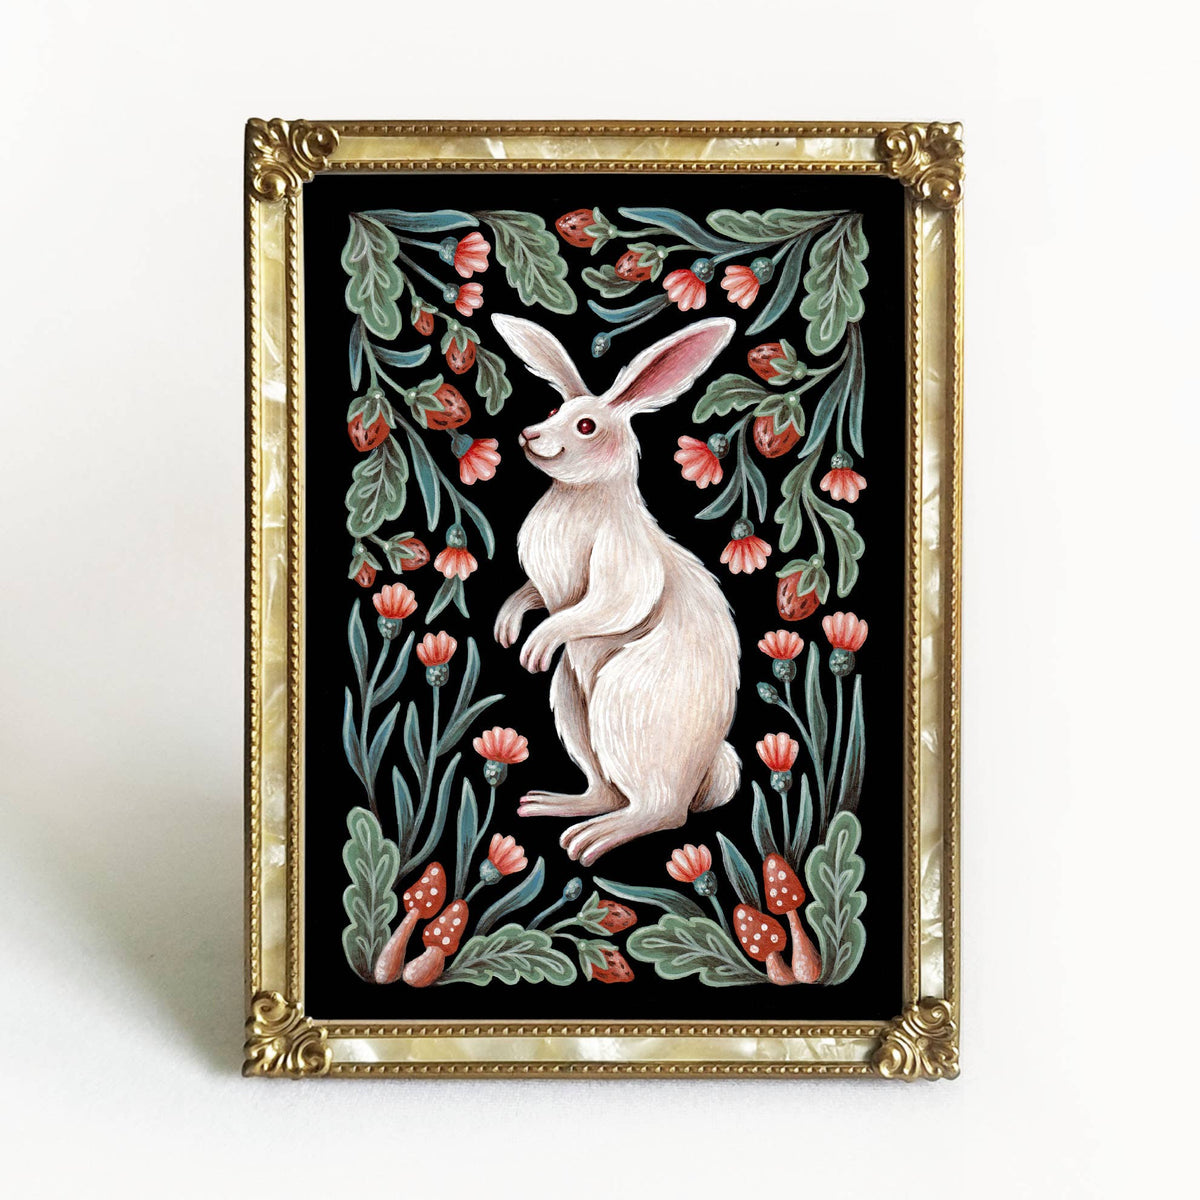 Faina Lorah Bunny Rabbit Art Print Folk Decor: 5x7